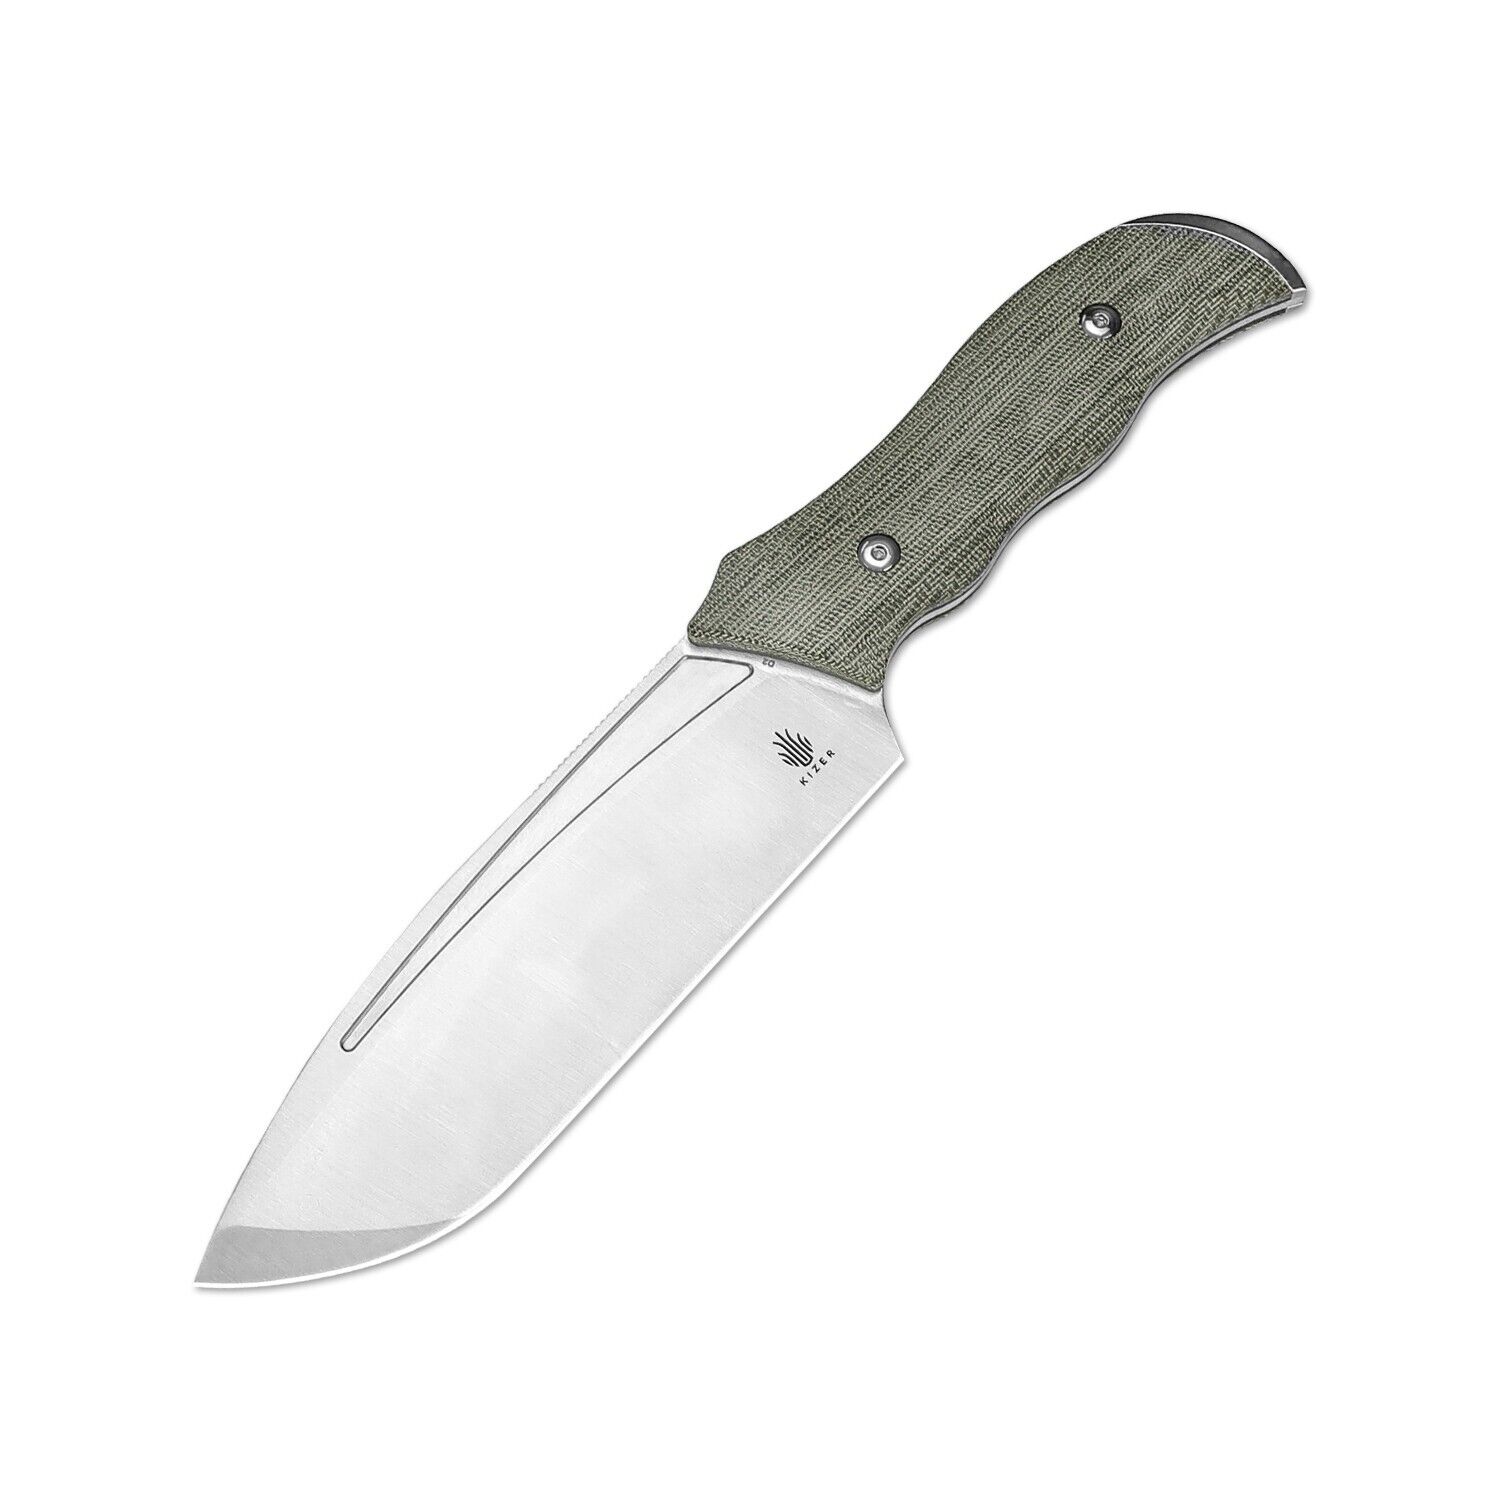 Kizer Metaproptizol Fixed Blade Knife, D2 Steel, Green Micarta Handle, 1054A1